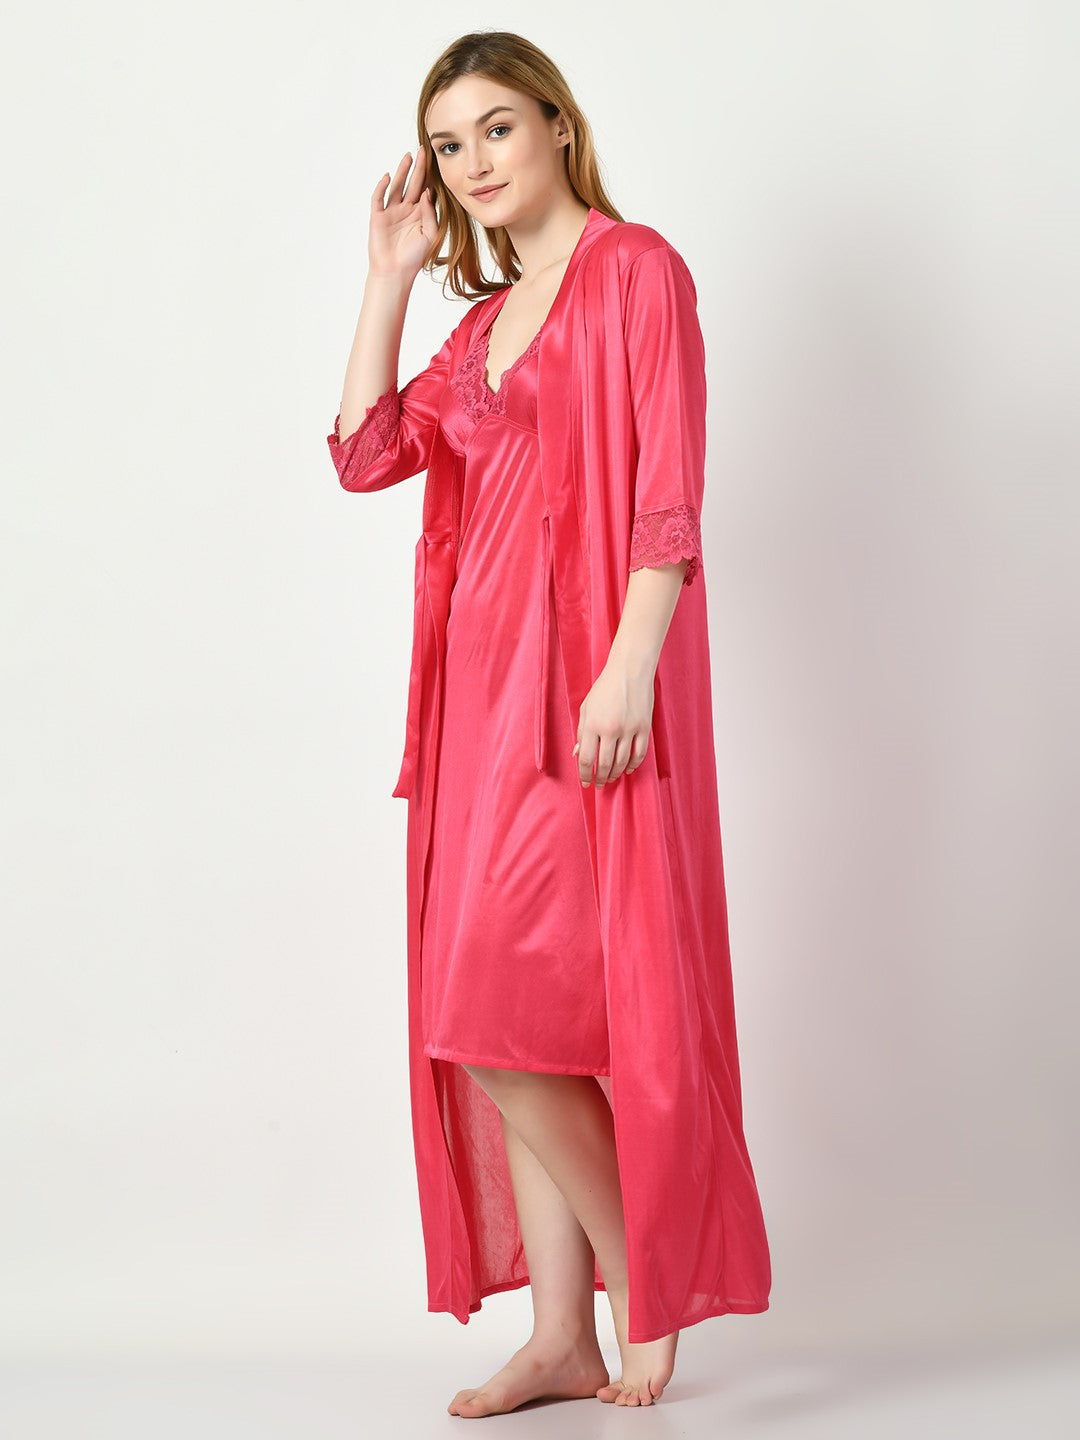 Women's Satin Pink Nightdress - Legit Affair